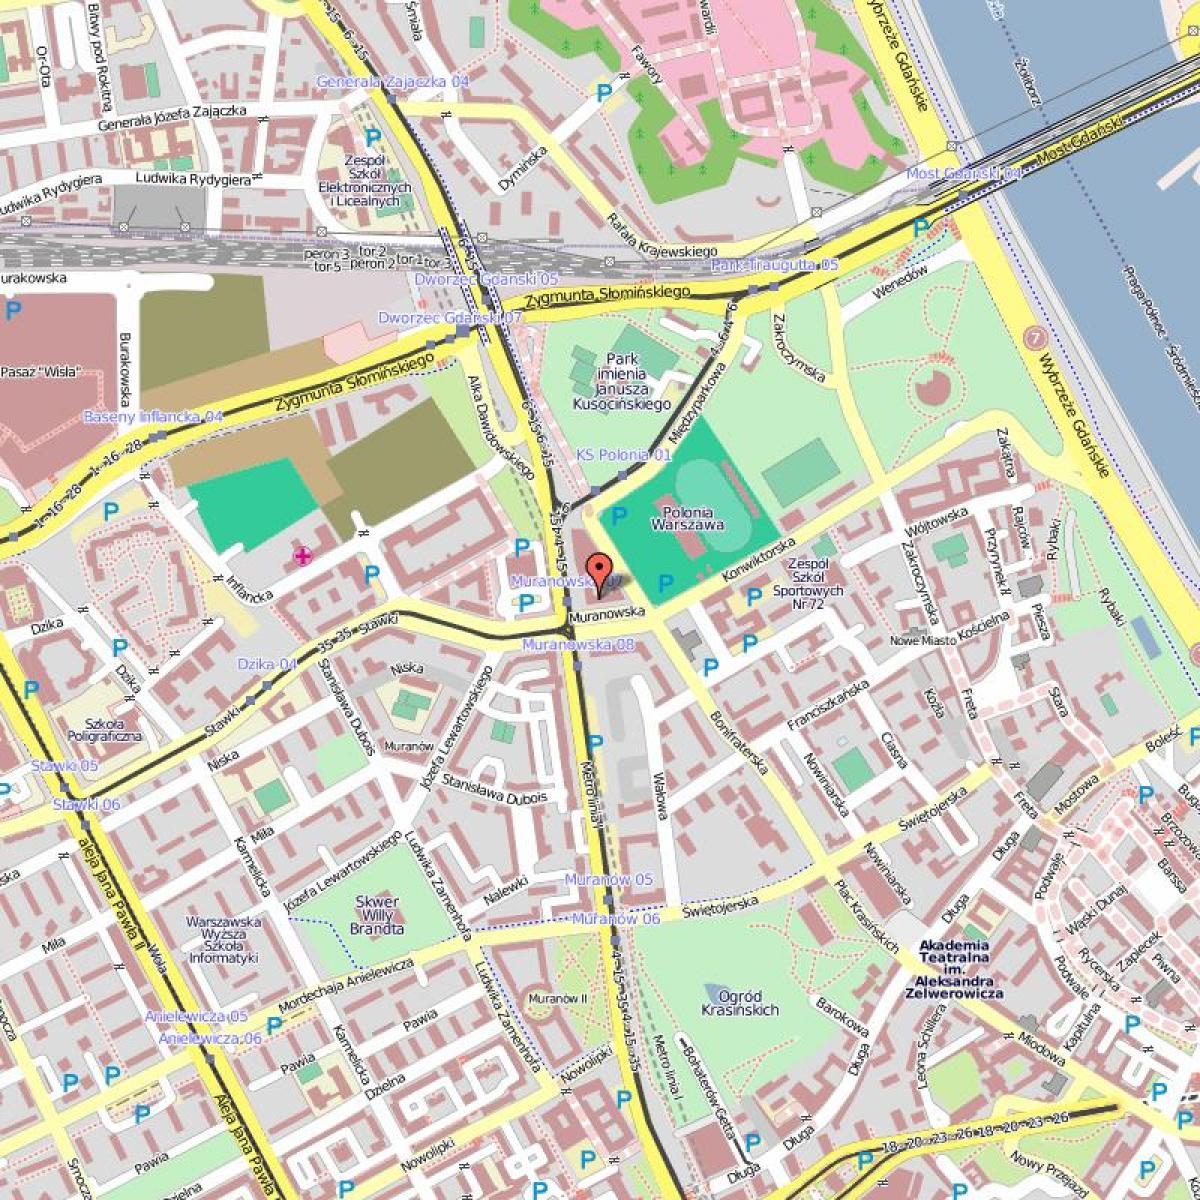 Kart over gamle bydelen i Warszawa, polen